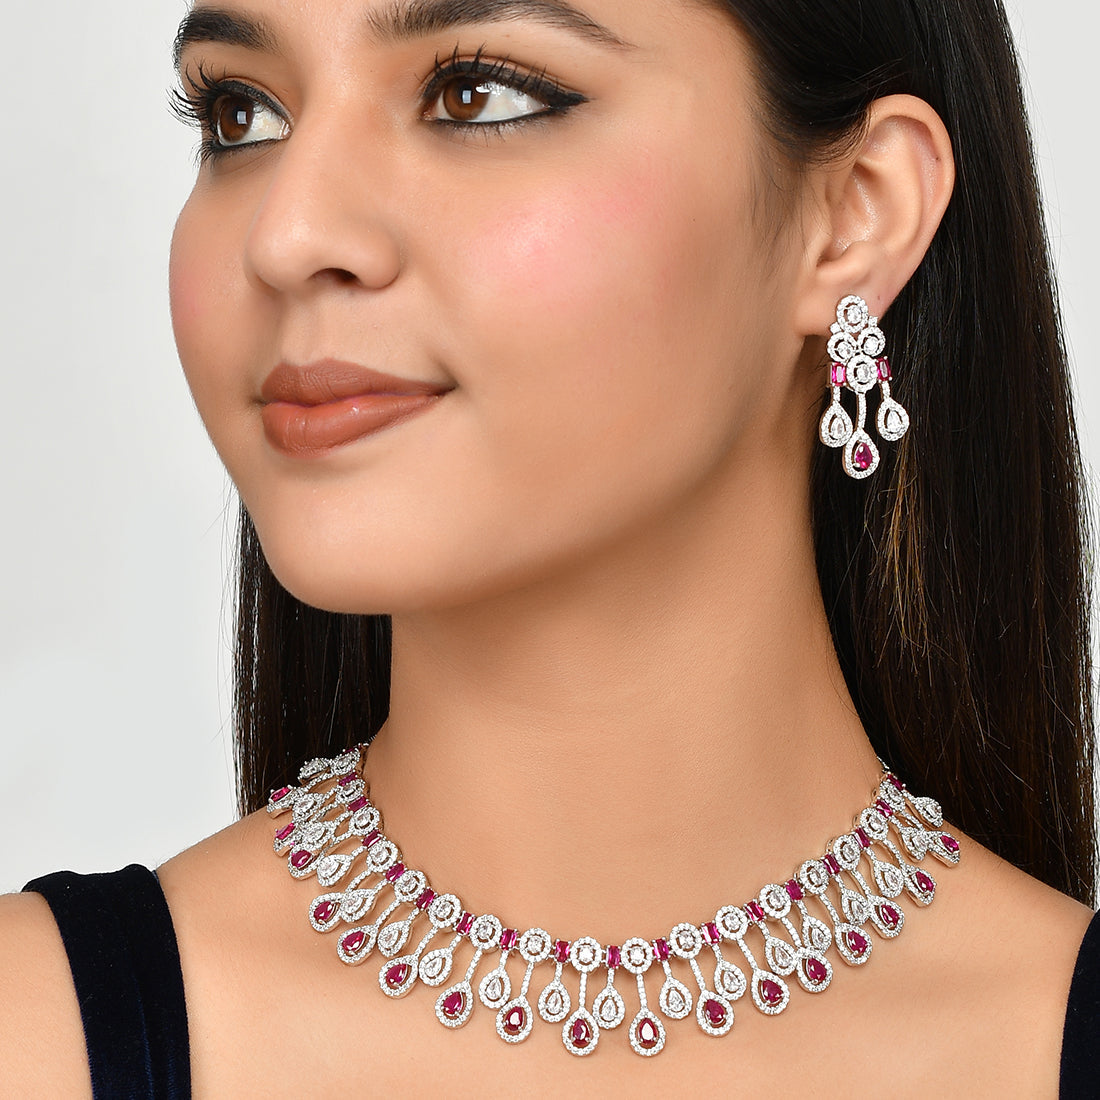 Women's Sparkling Elegance Pink Silver-Plated Necklace Set - Voylla